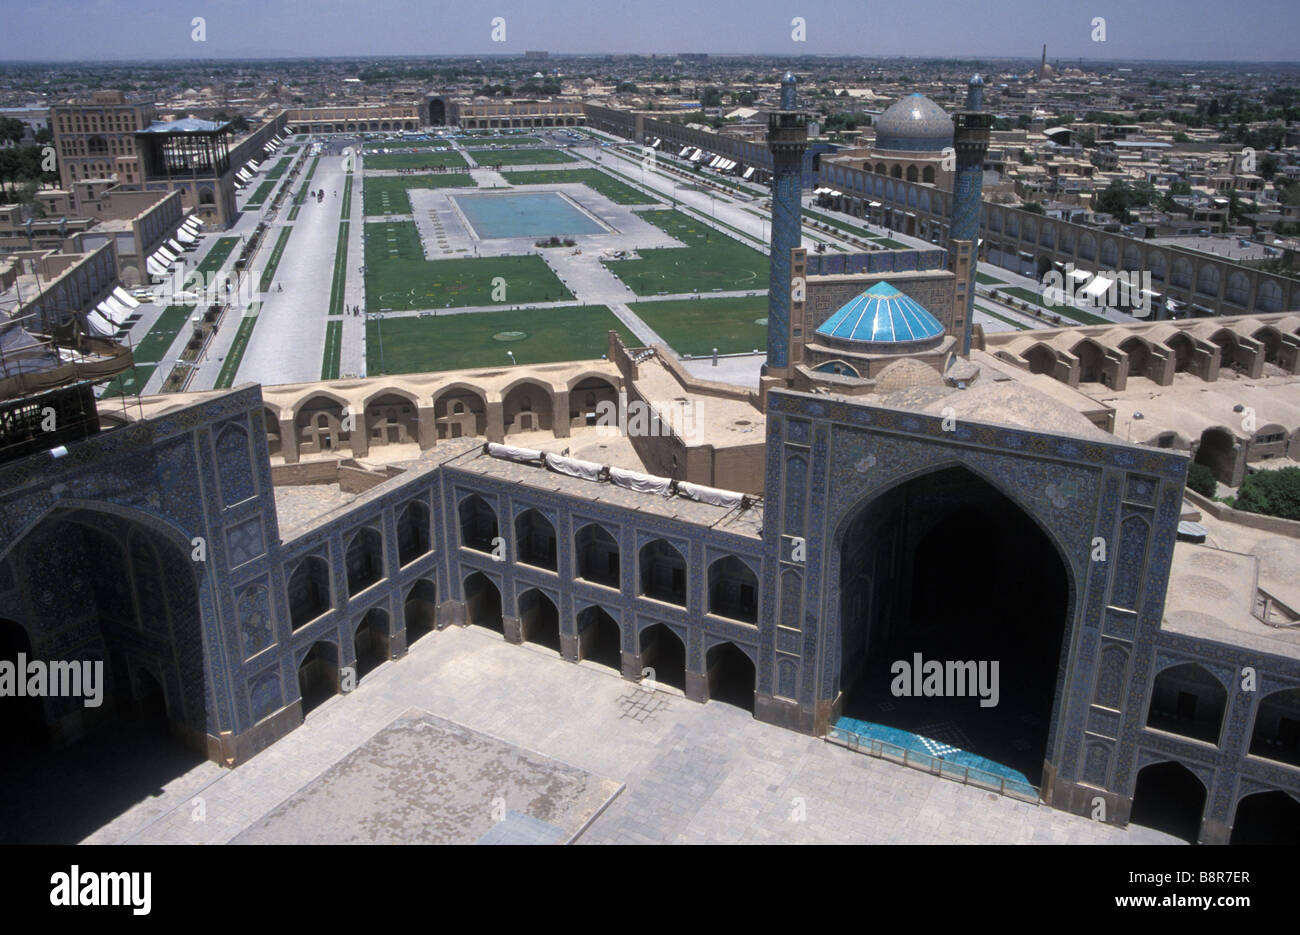 ancient Islamic Persian Iranian architecture tiles minarets domes courtyard Masjid e Imam Isfahan Iran Stock Photo